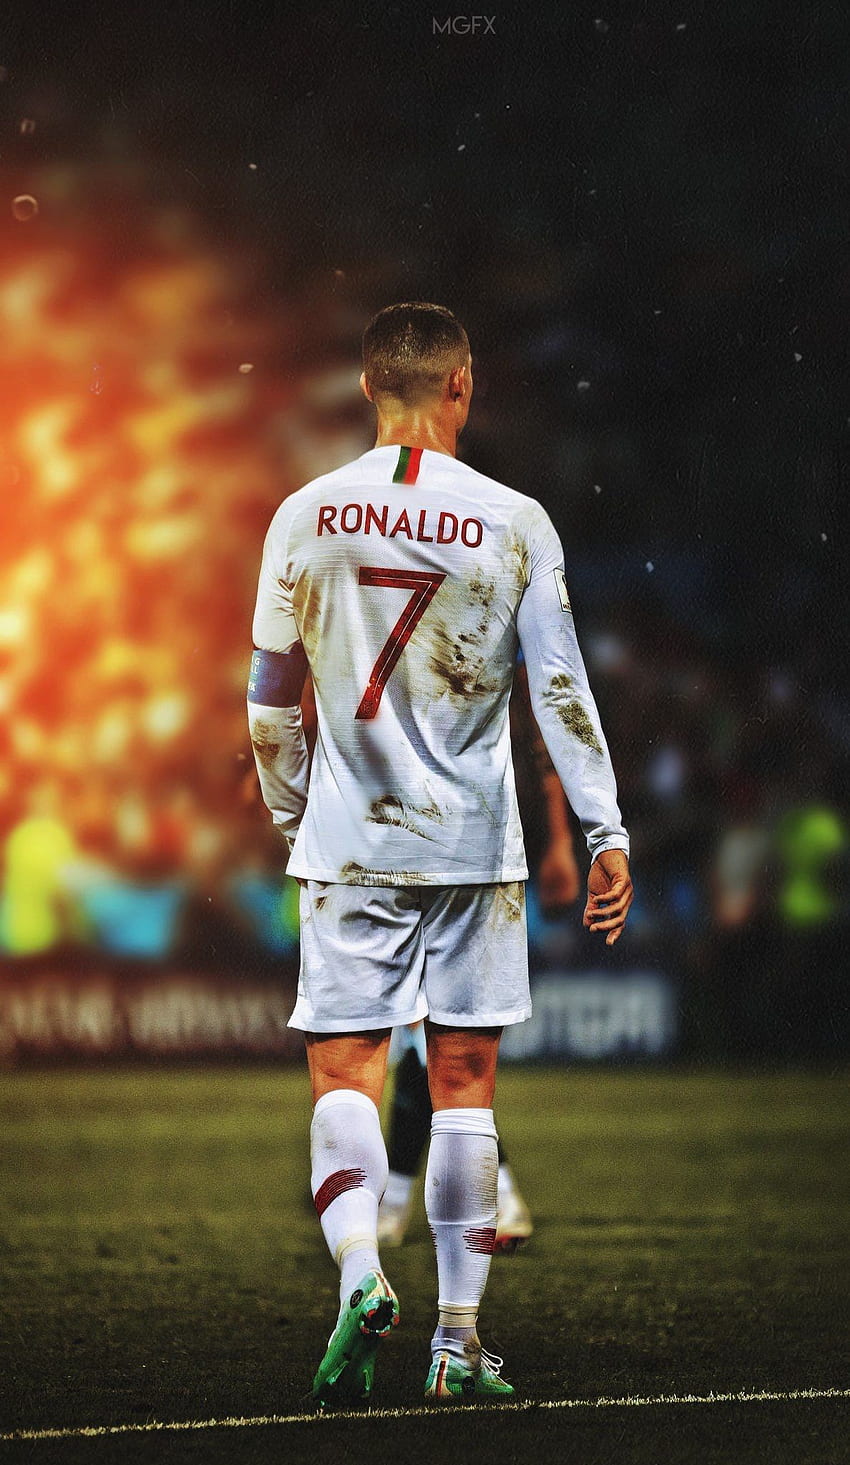 Annalisa Hackett tentang Real Madrid dan CR7. Ronaldo wallpaper ponsel HD